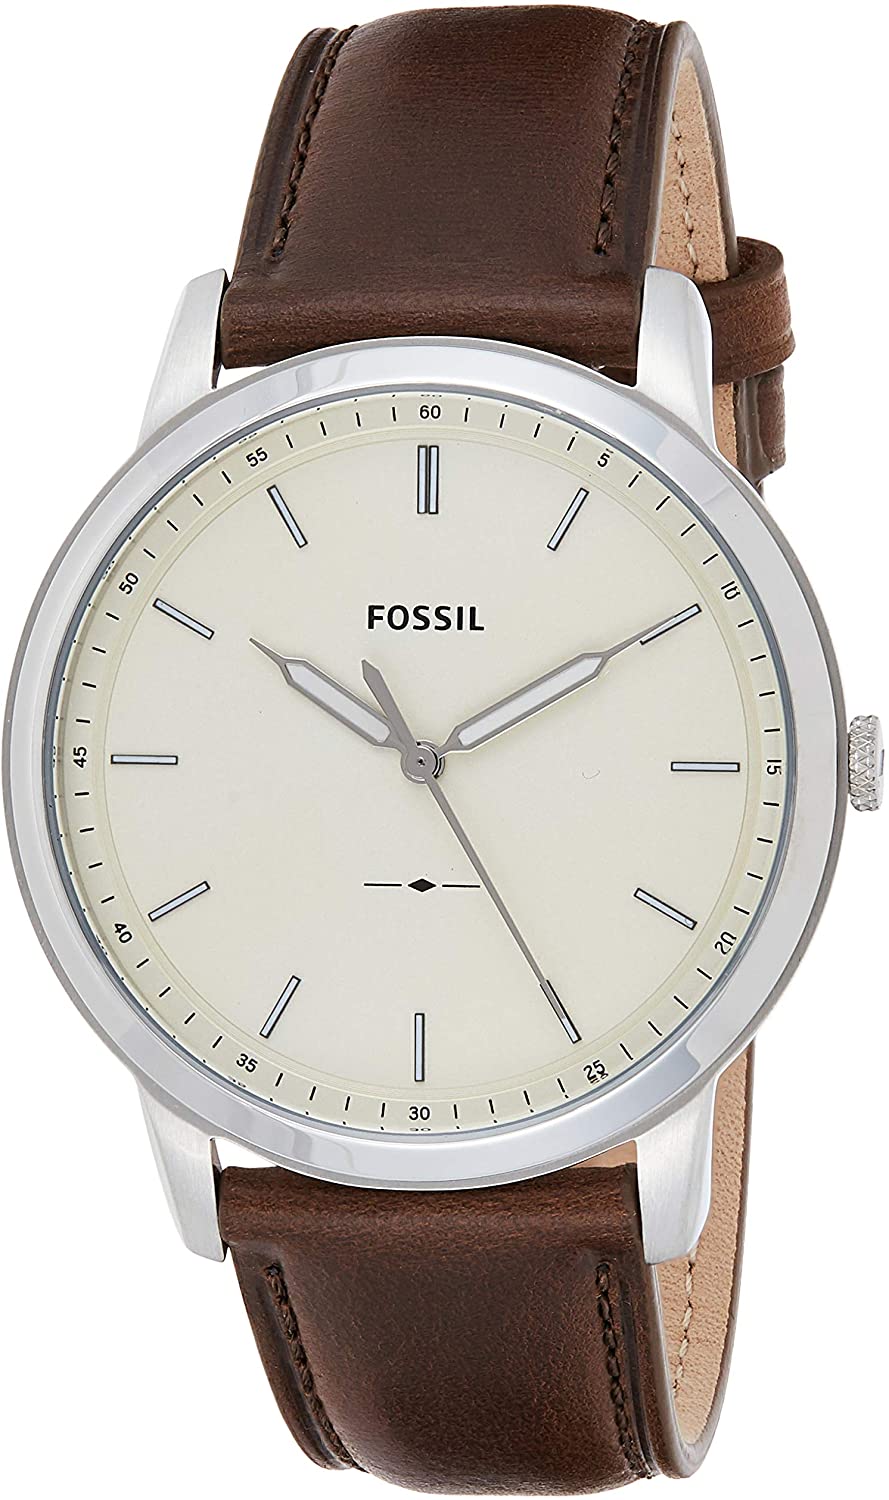 Fossil Men's Quartz Leather Watch FS5439